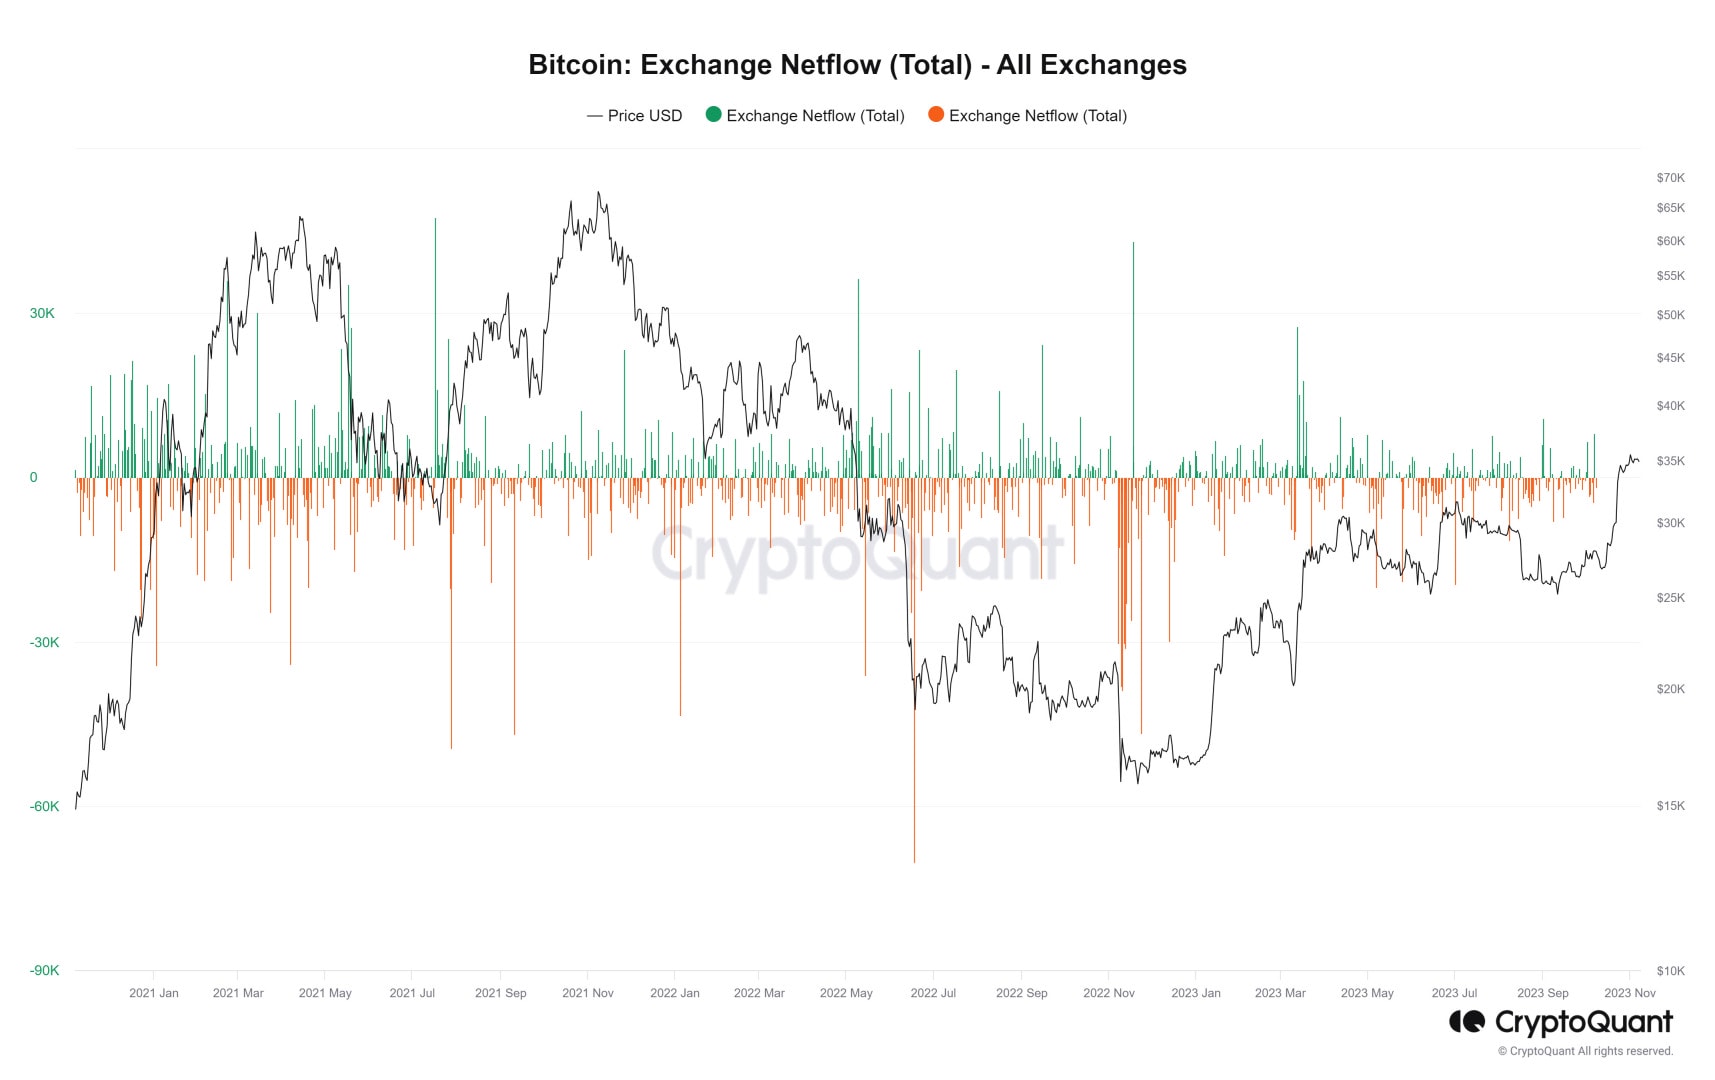 Bitcoin On-Chain Exchange Netflow